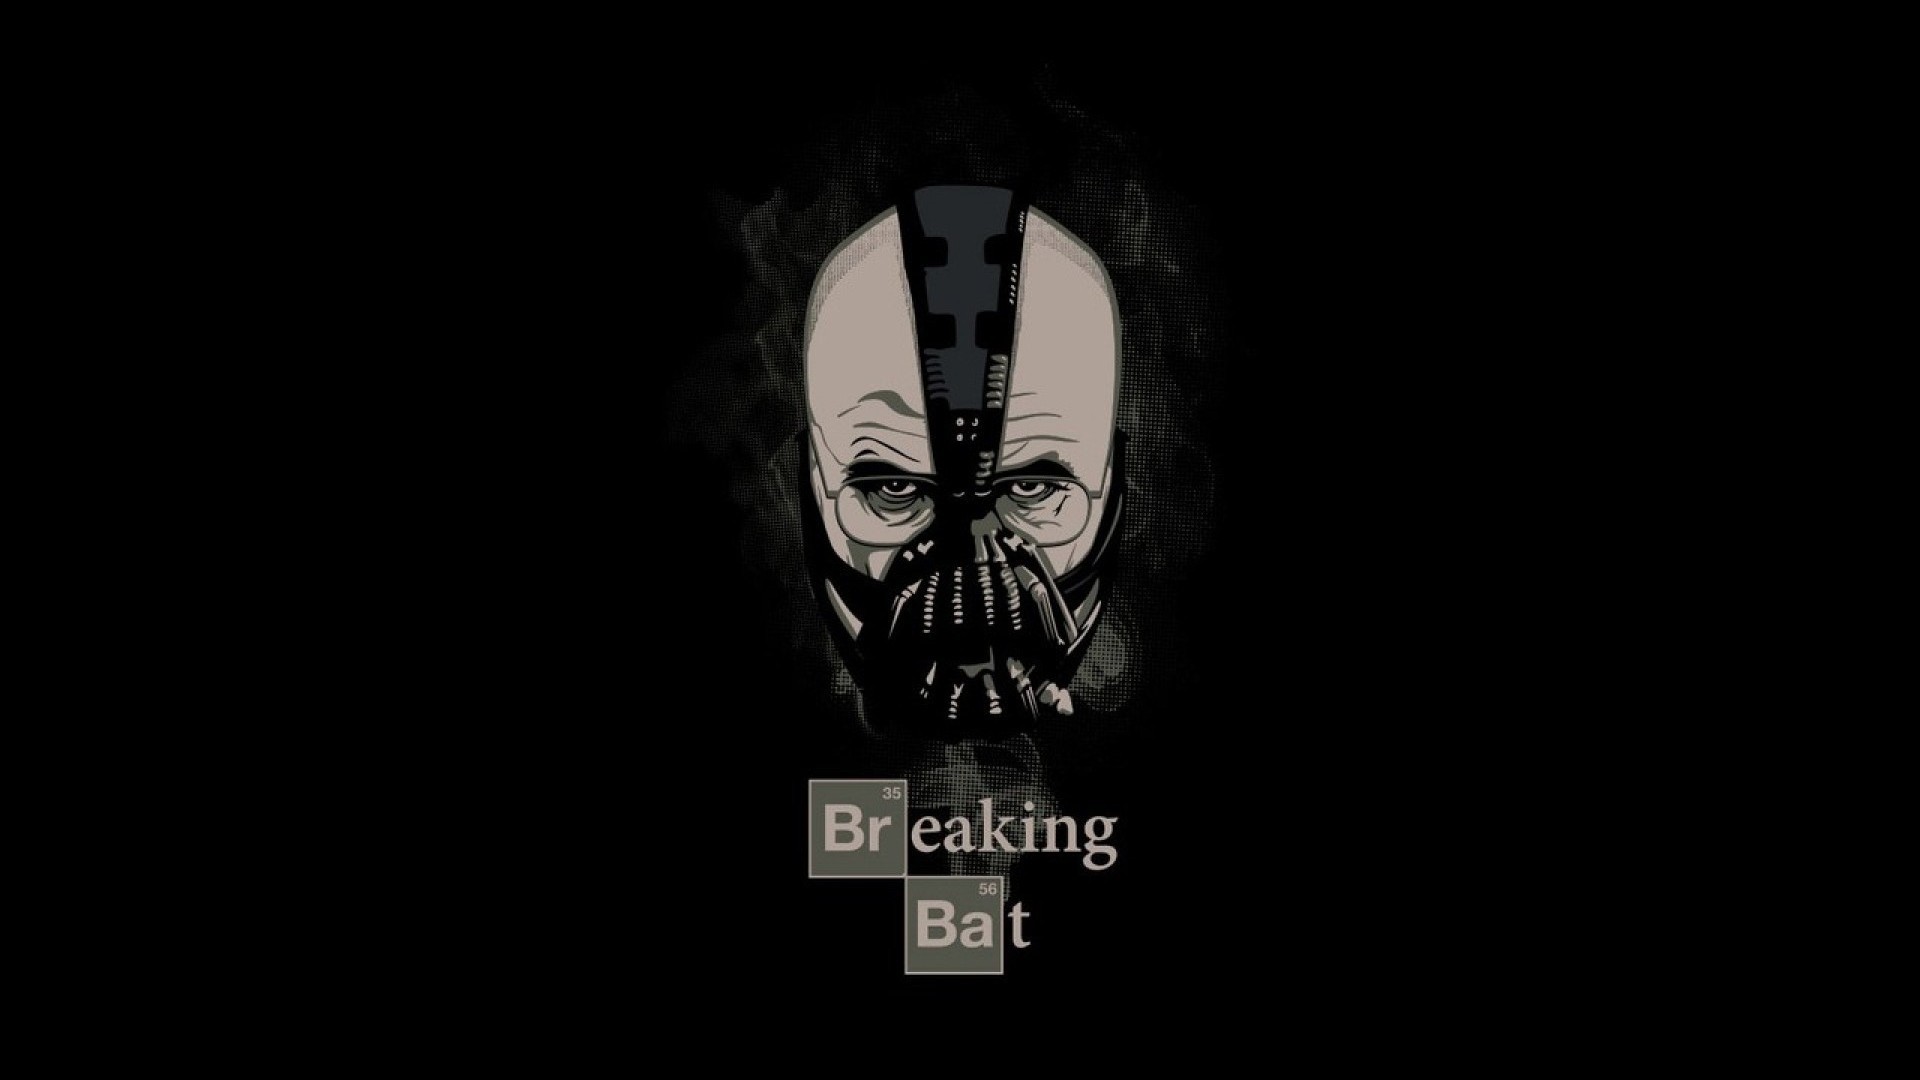 General 1920x1080 Bane The Dark Knight movies crossover Breaking Bad artwork TV series